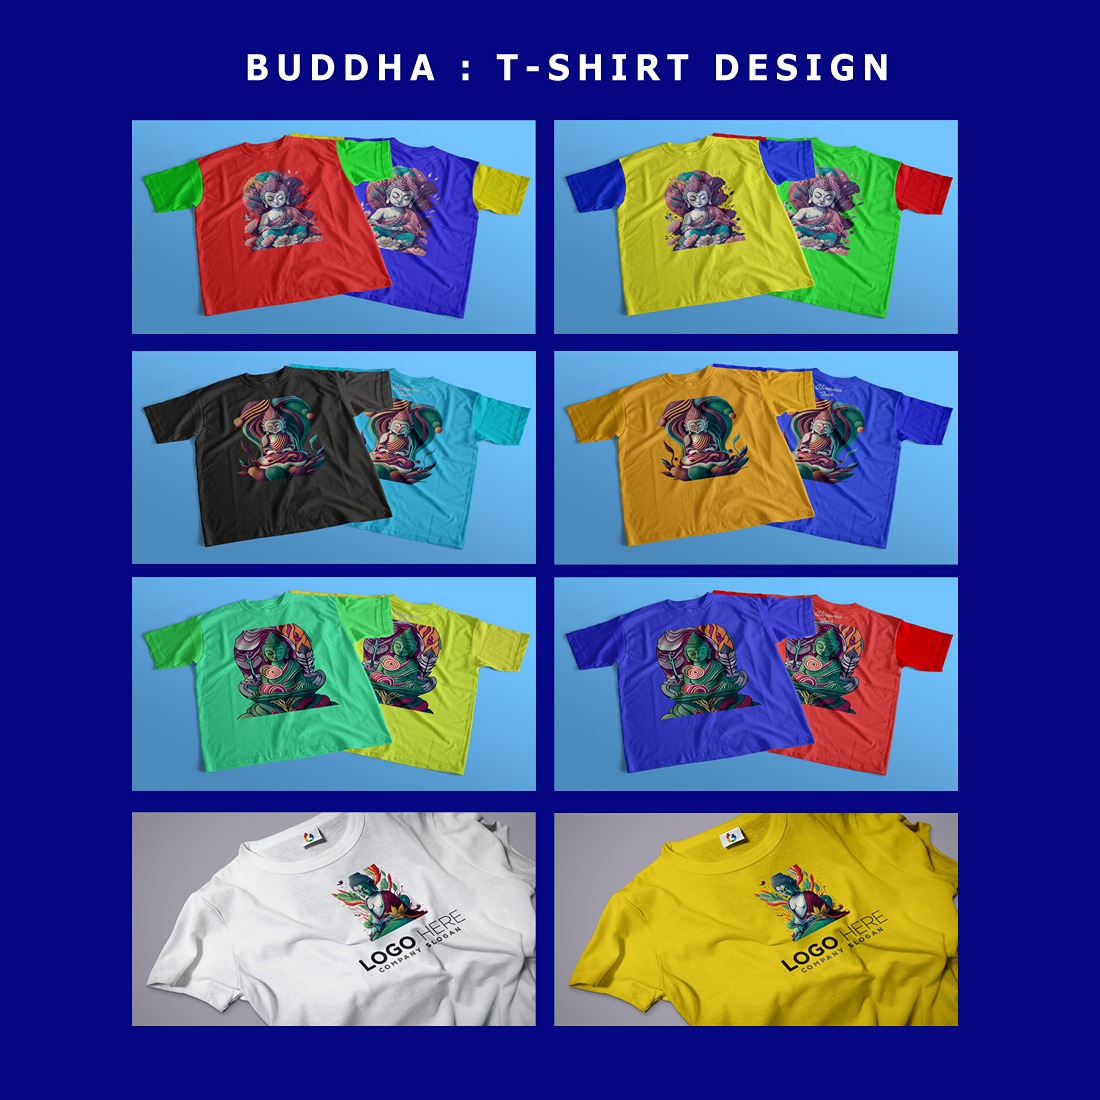 Buddha - T-shirt Design Template, buddha t-shirt, buddha half t-shirt, buddha logo t-shirt, buddha man or woman t-shirt cover image.